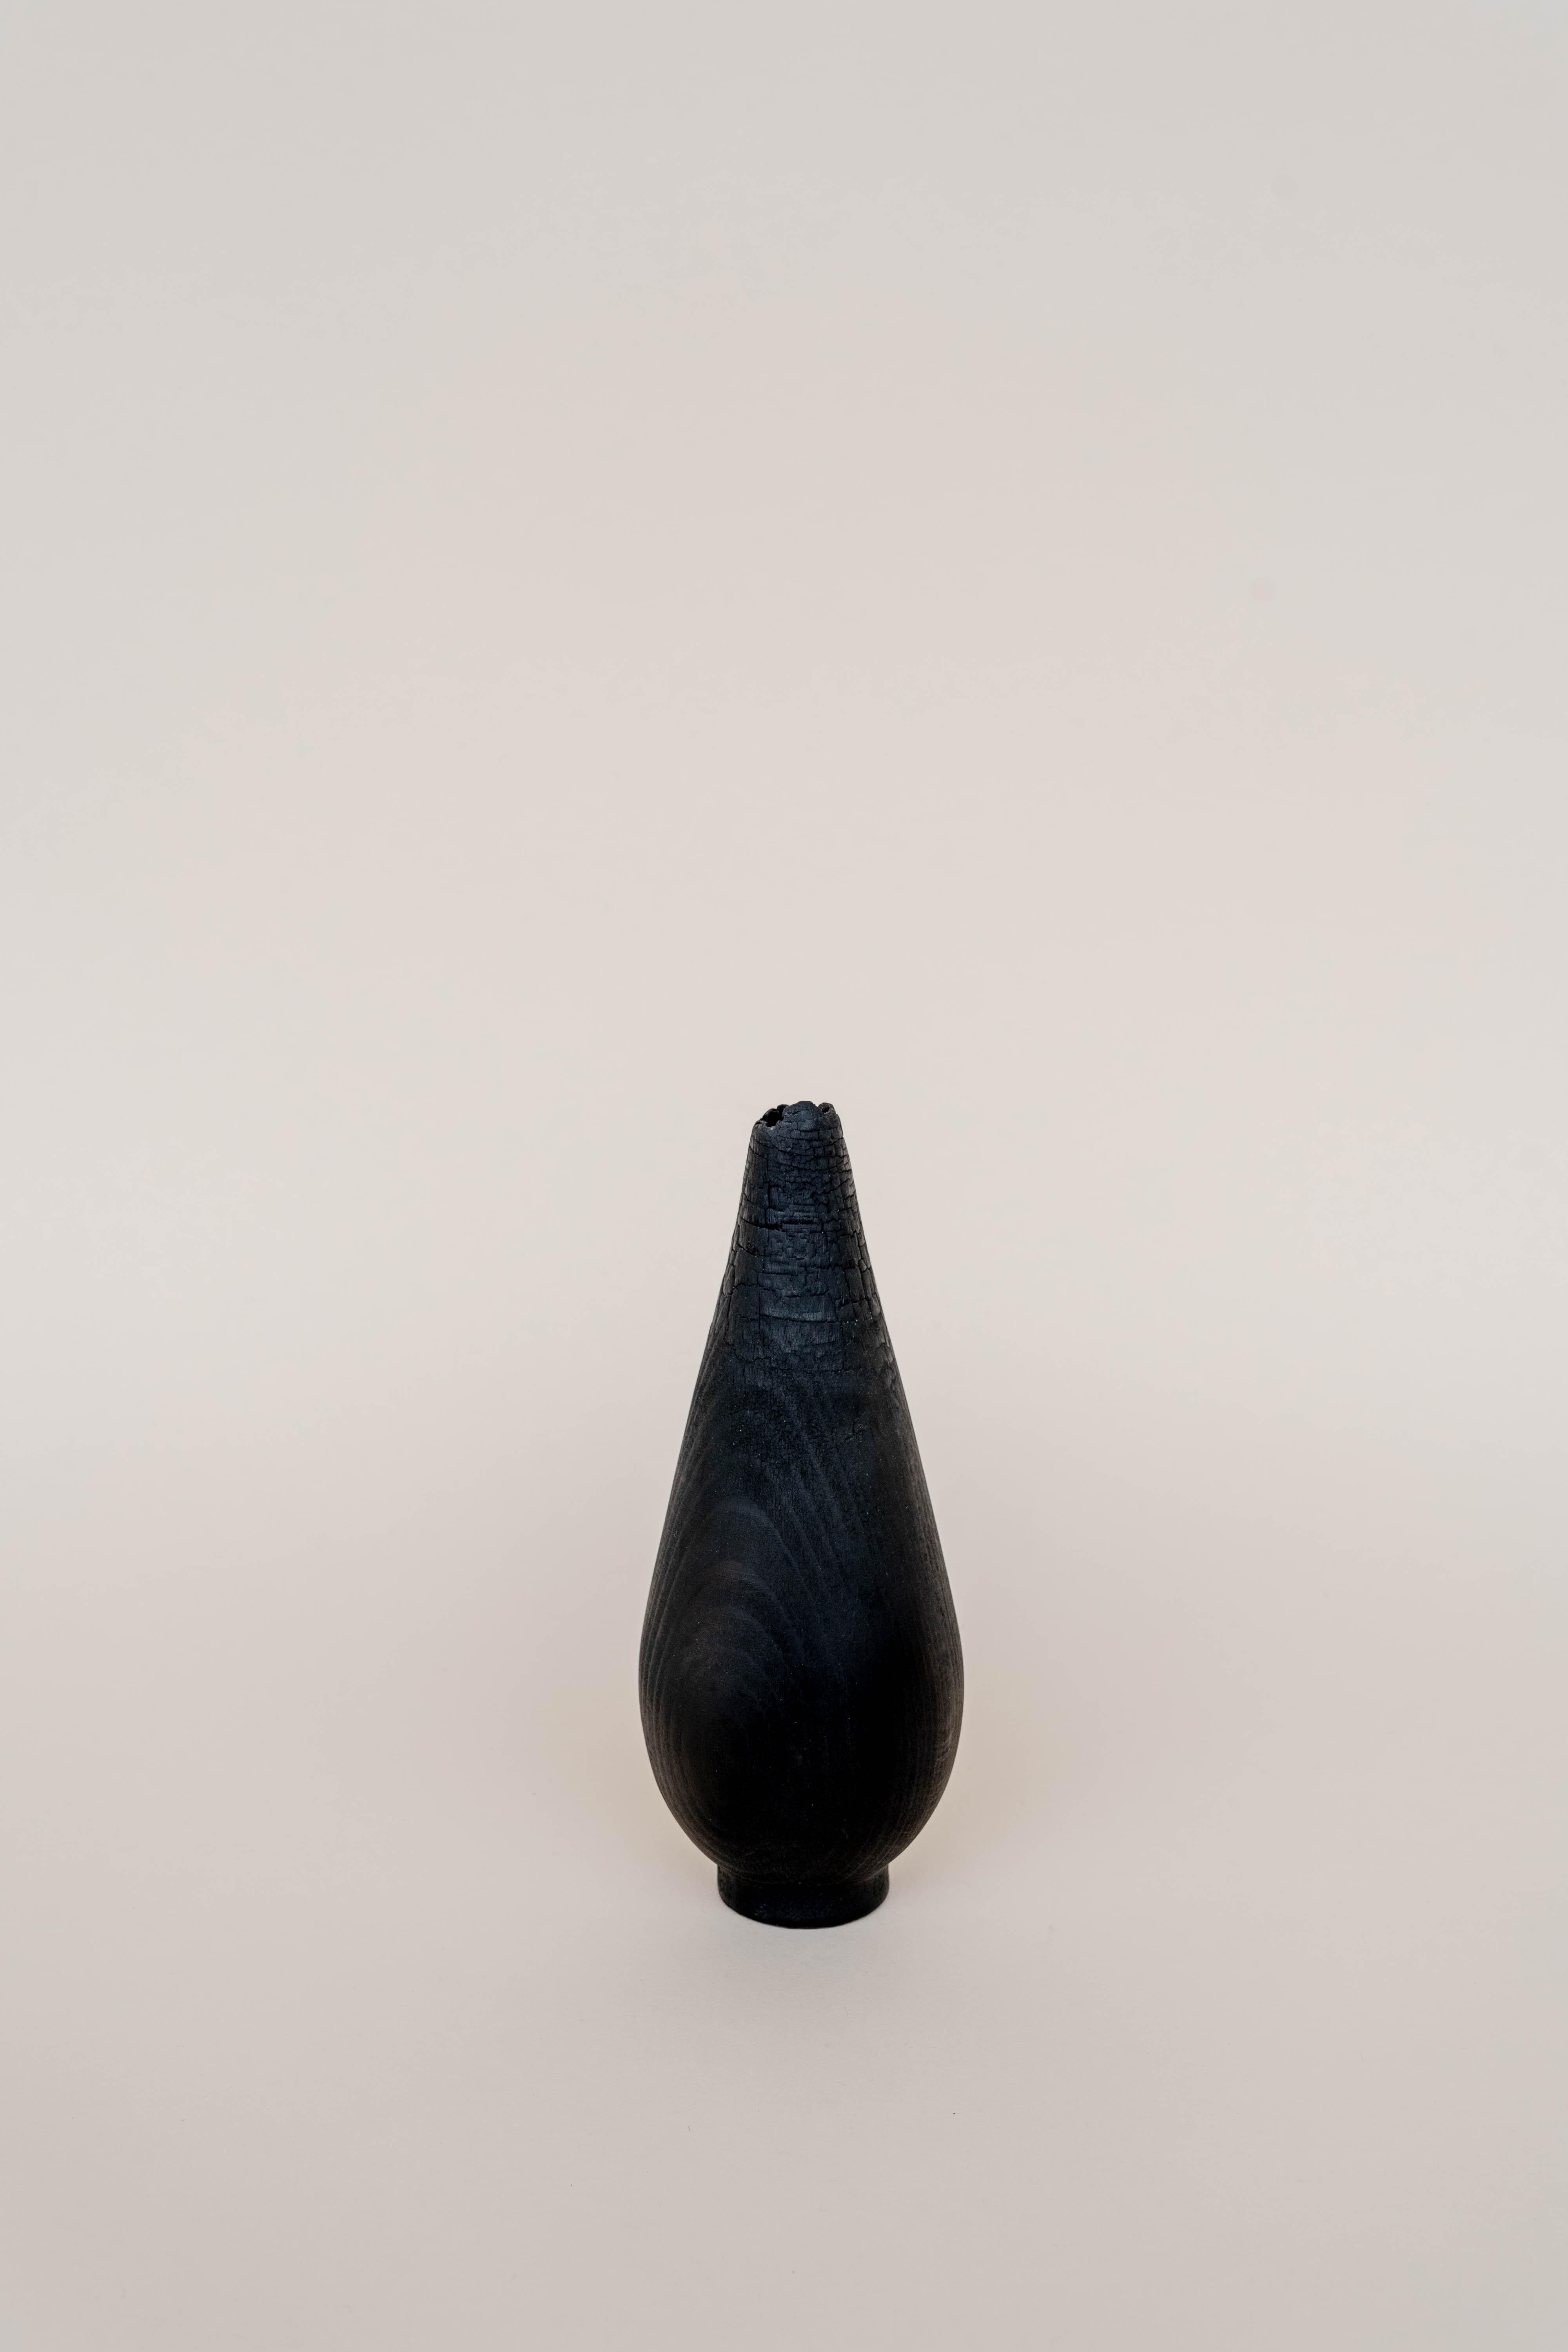 Post-Modern Small Burnt Vase by Daniel Elkayam For Sale